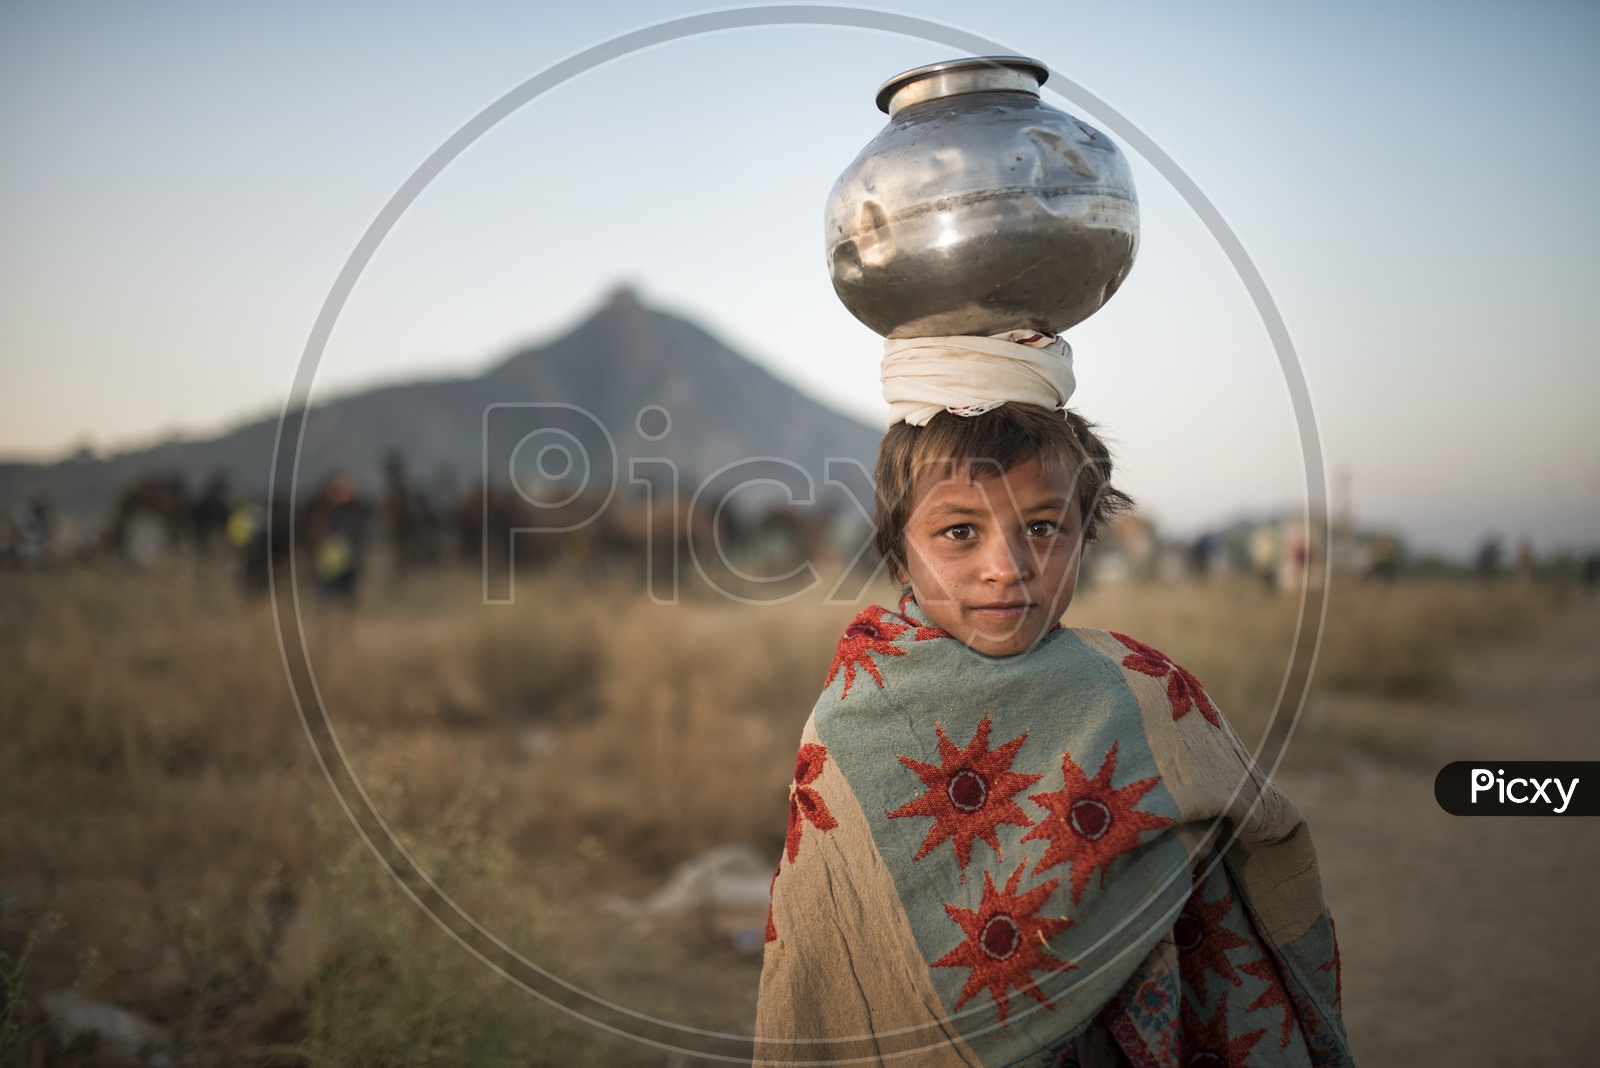 An Indian Boy With a Water vessel on Head in Pushkar Camel fair